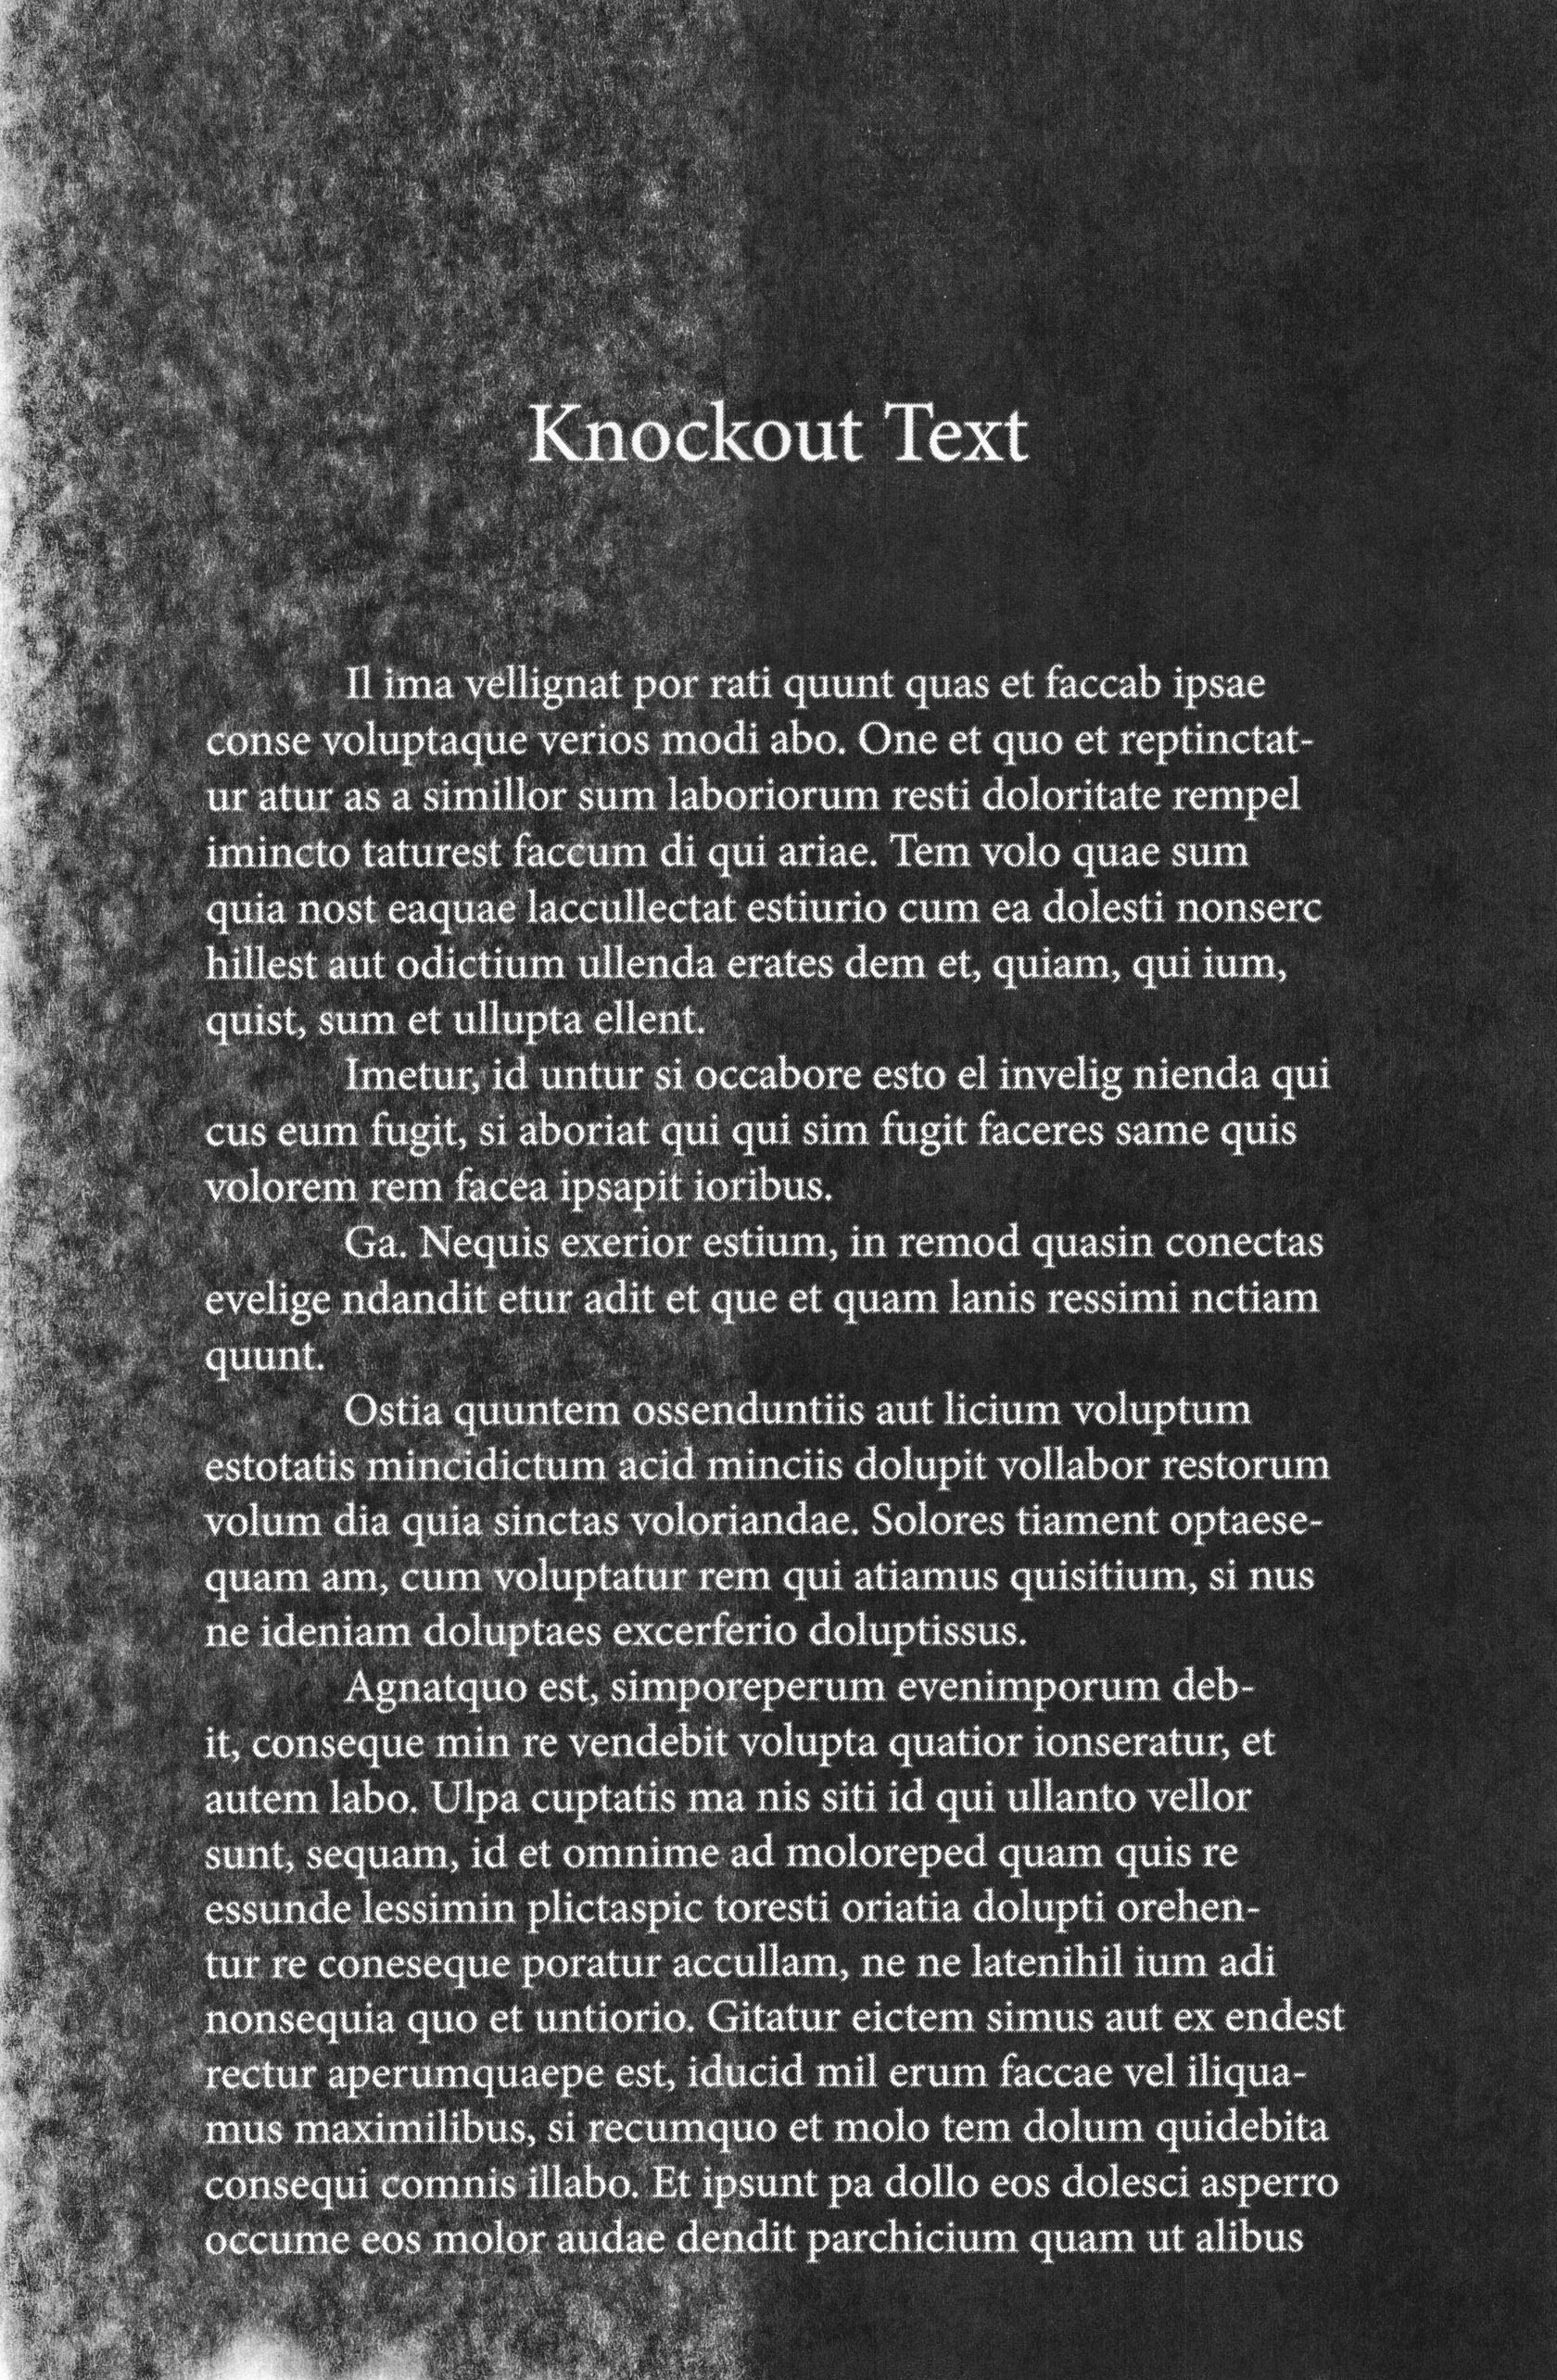 20191022_Knockout_Text.JPG